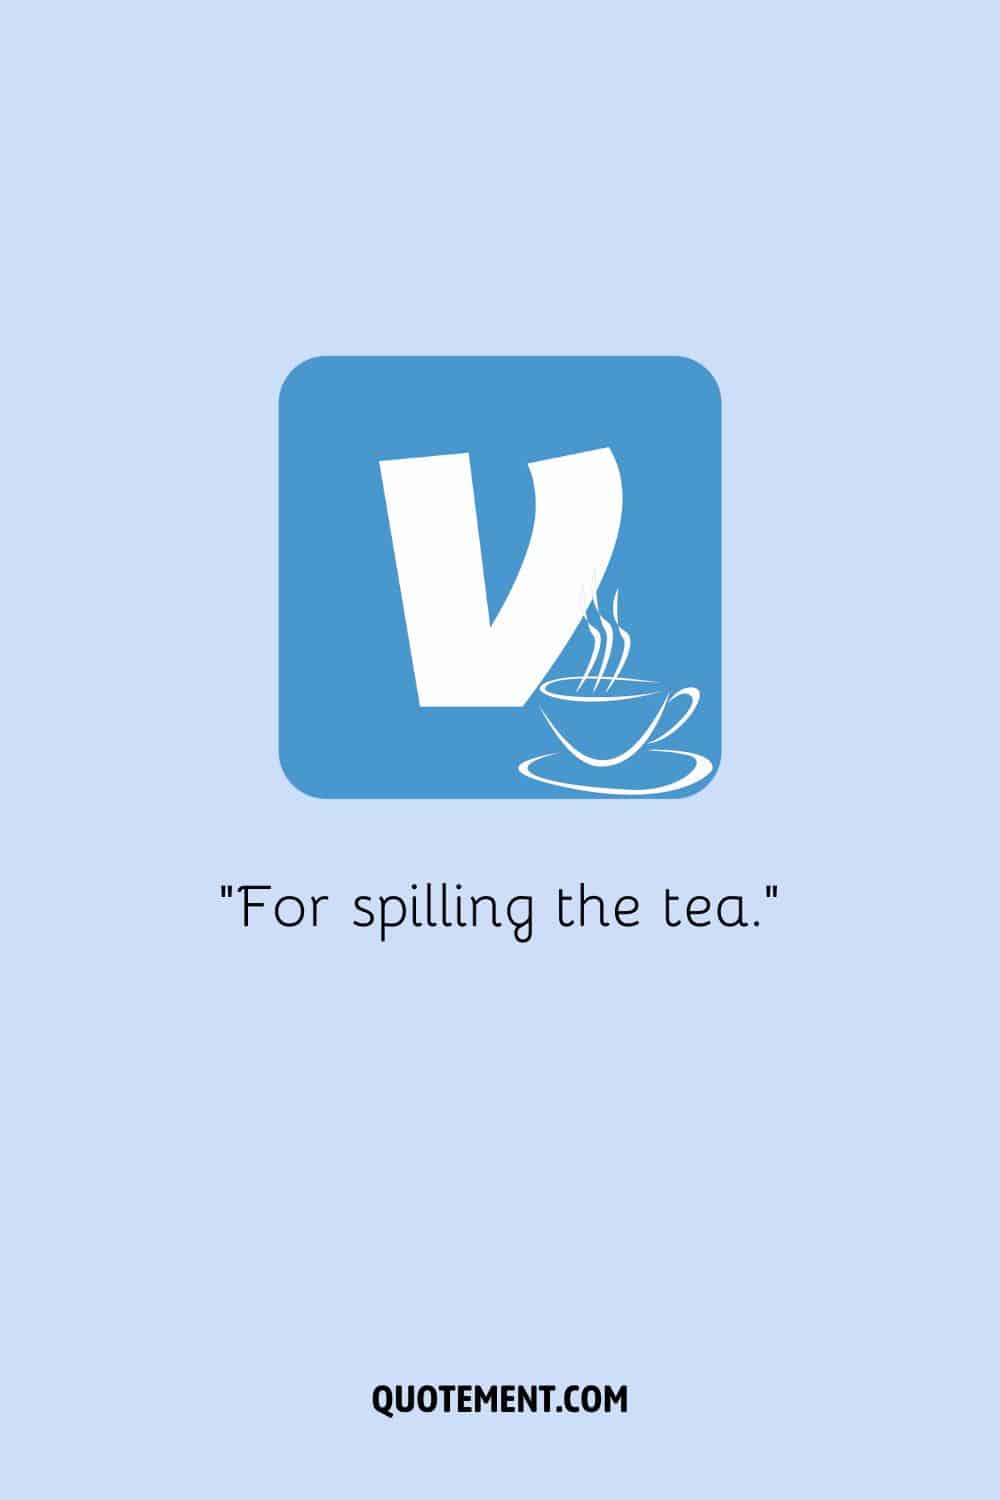 For spilling the tea